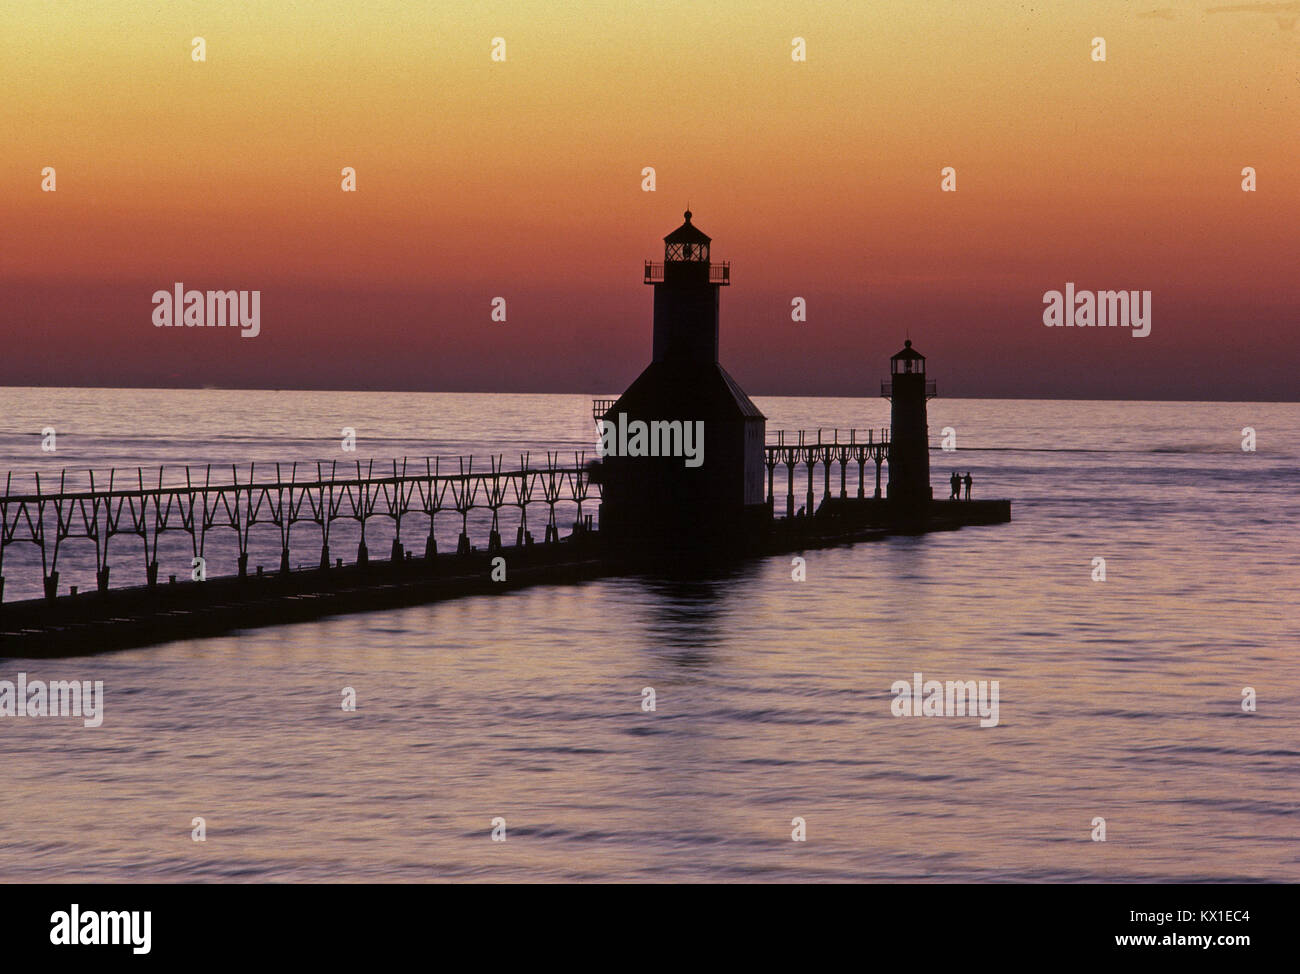 St Joseph North Pier Lights Saint Joseph Michigan United States of America Stock Photo